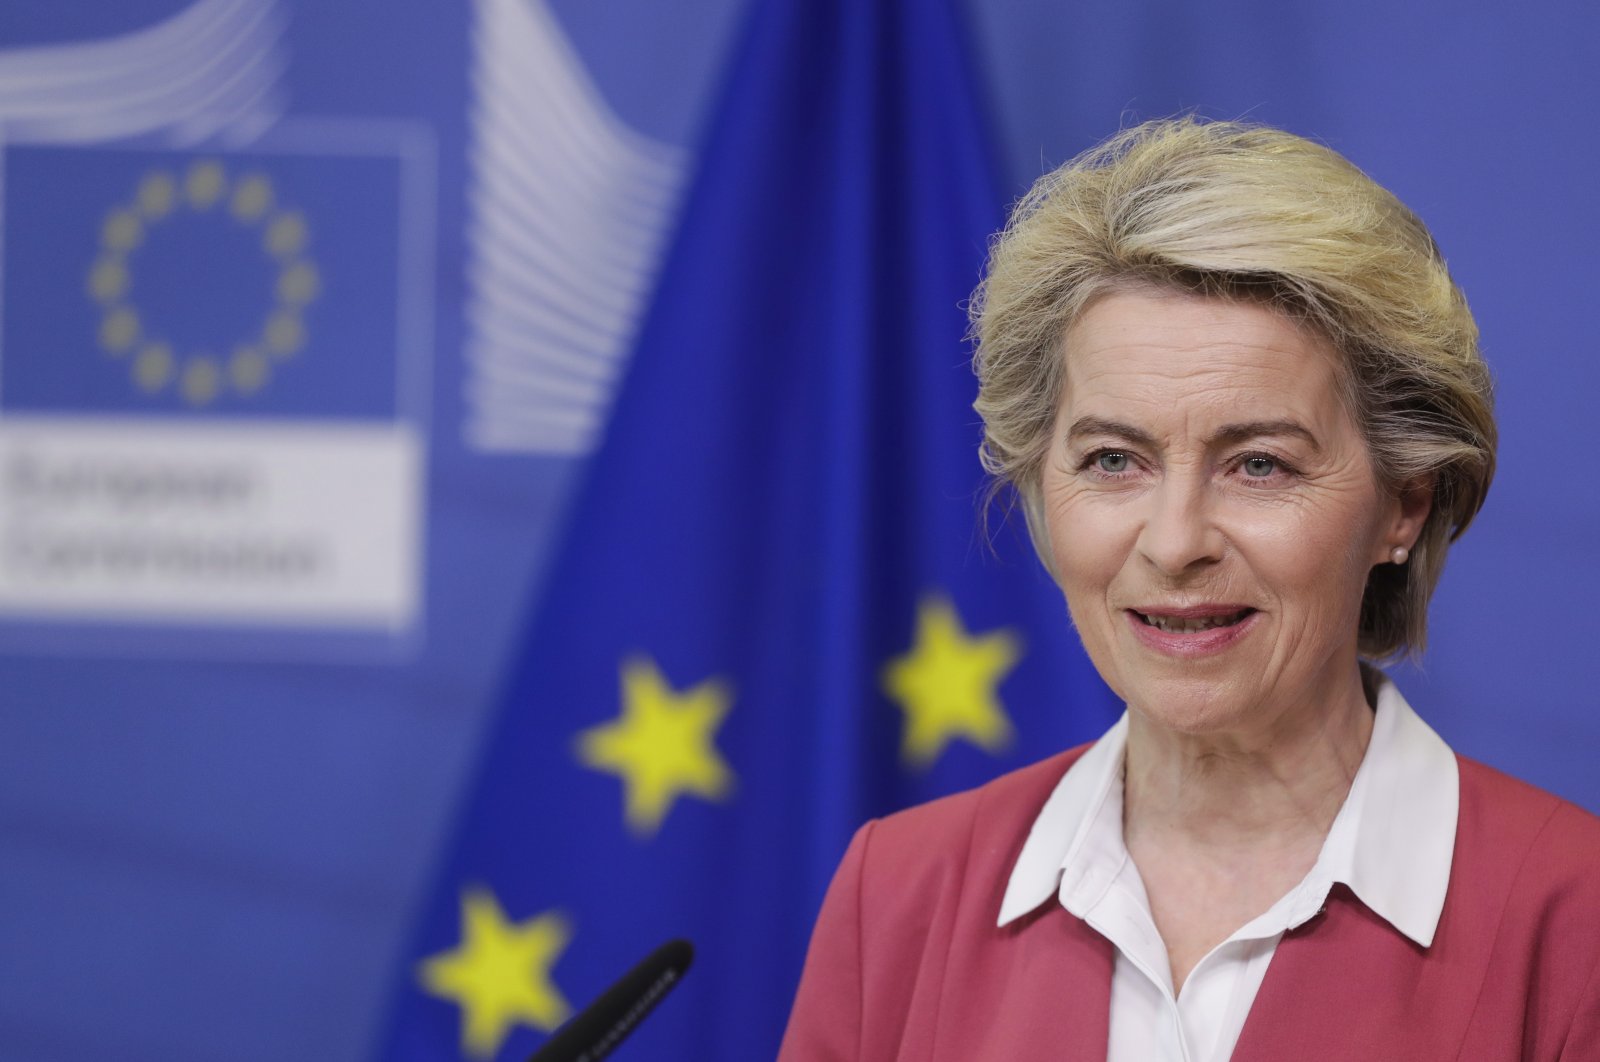 European Commission President Ursula von der Leyen delivers a statement at EU headquarters in Brussels, July 27, 2021. (AP Photo)